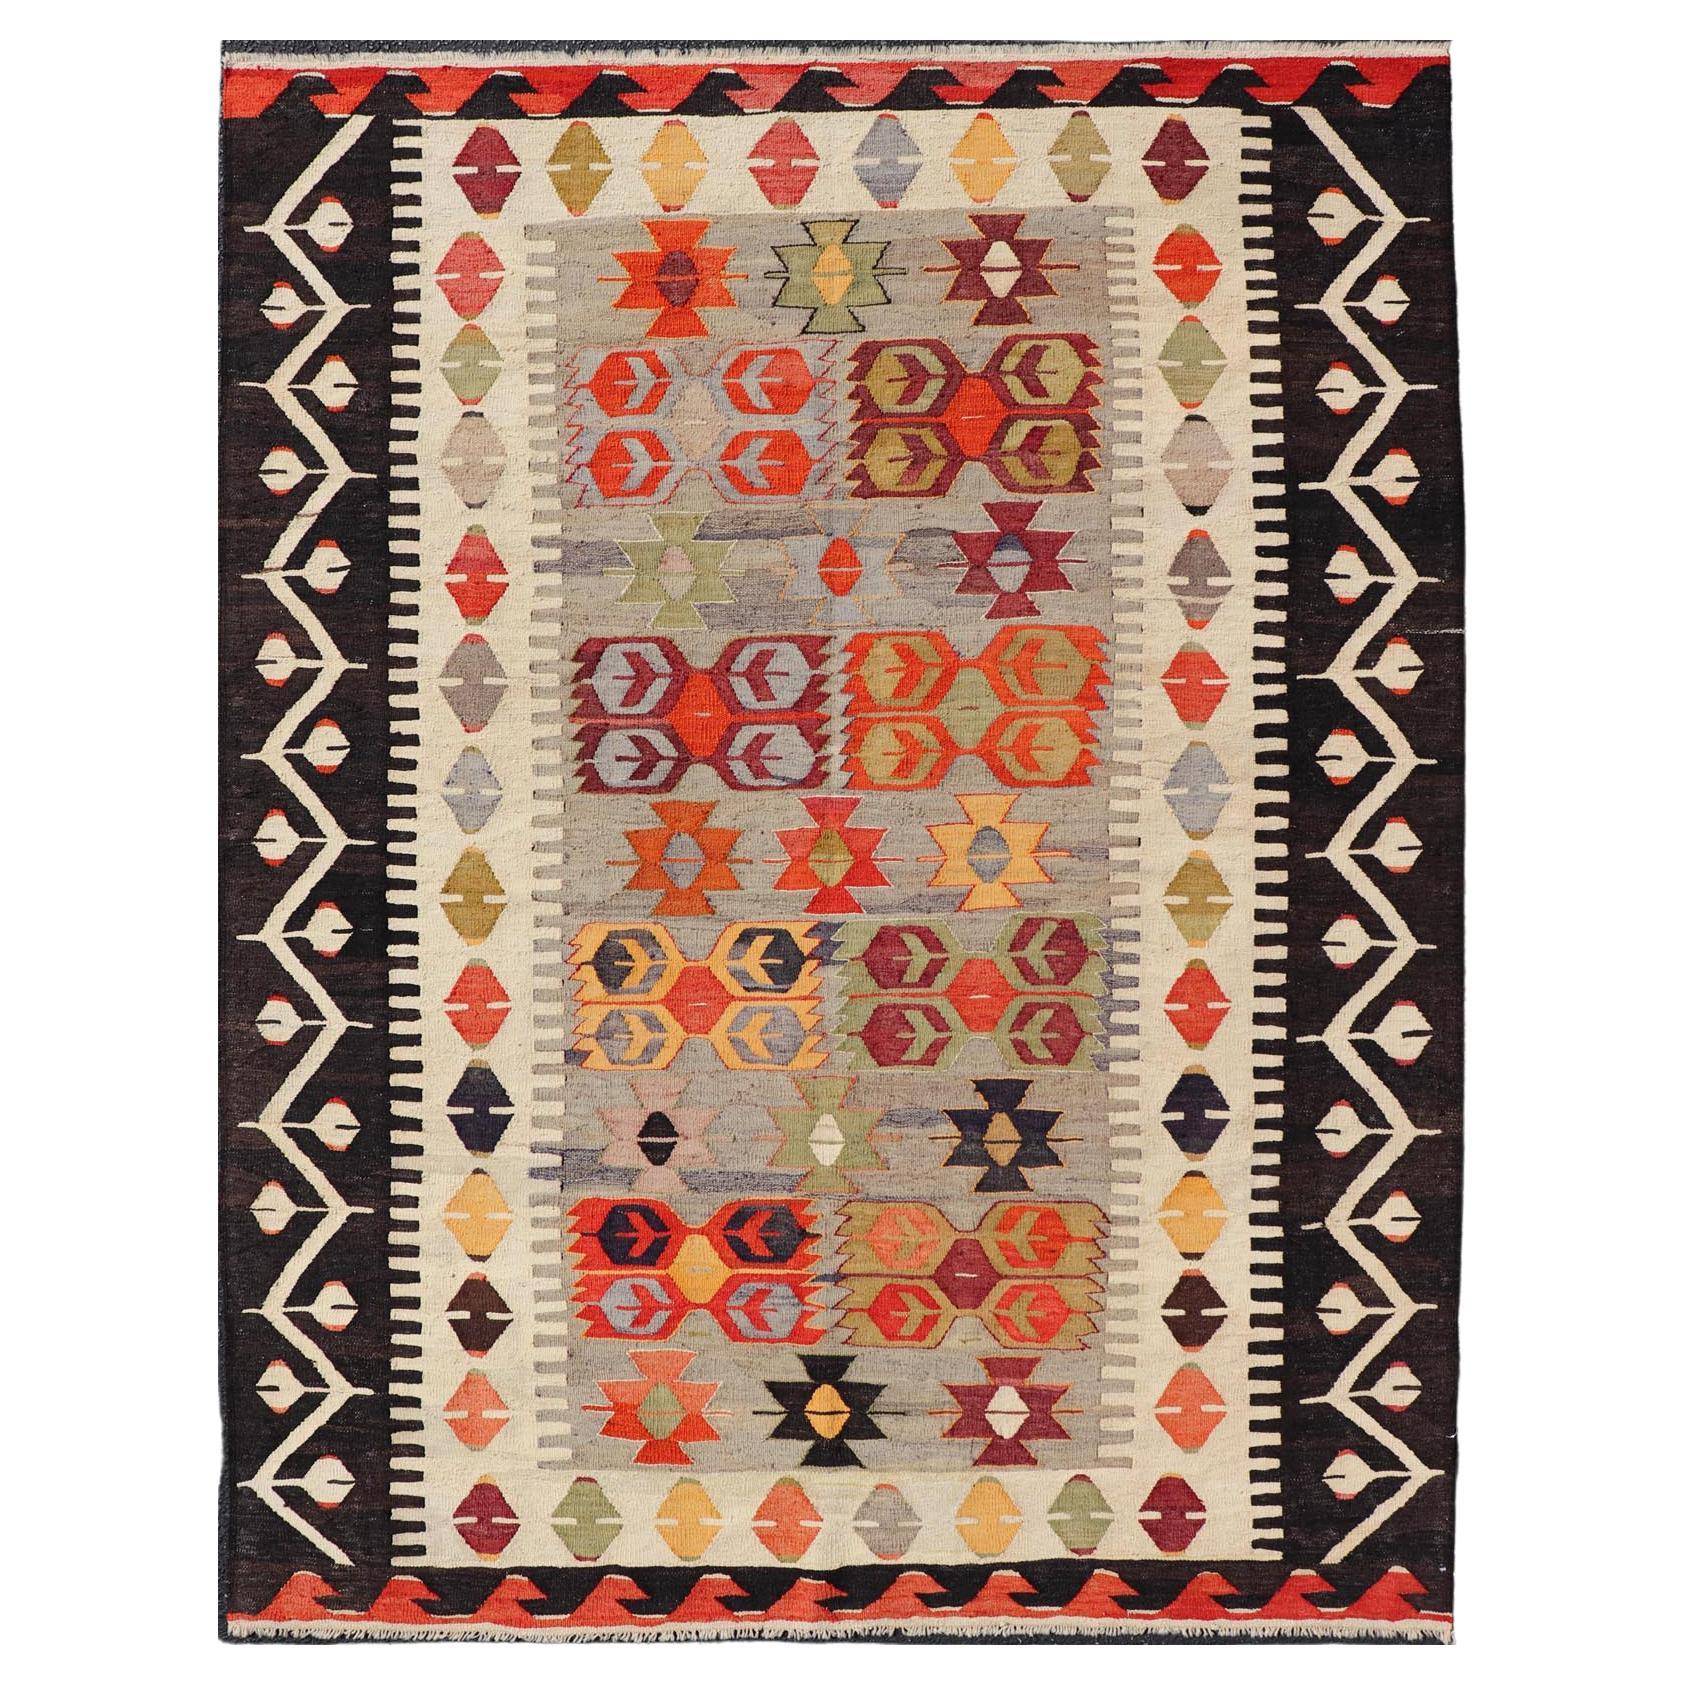 Colorful Vintage Turkish Flatweave Rug with All-Over Tribal Design